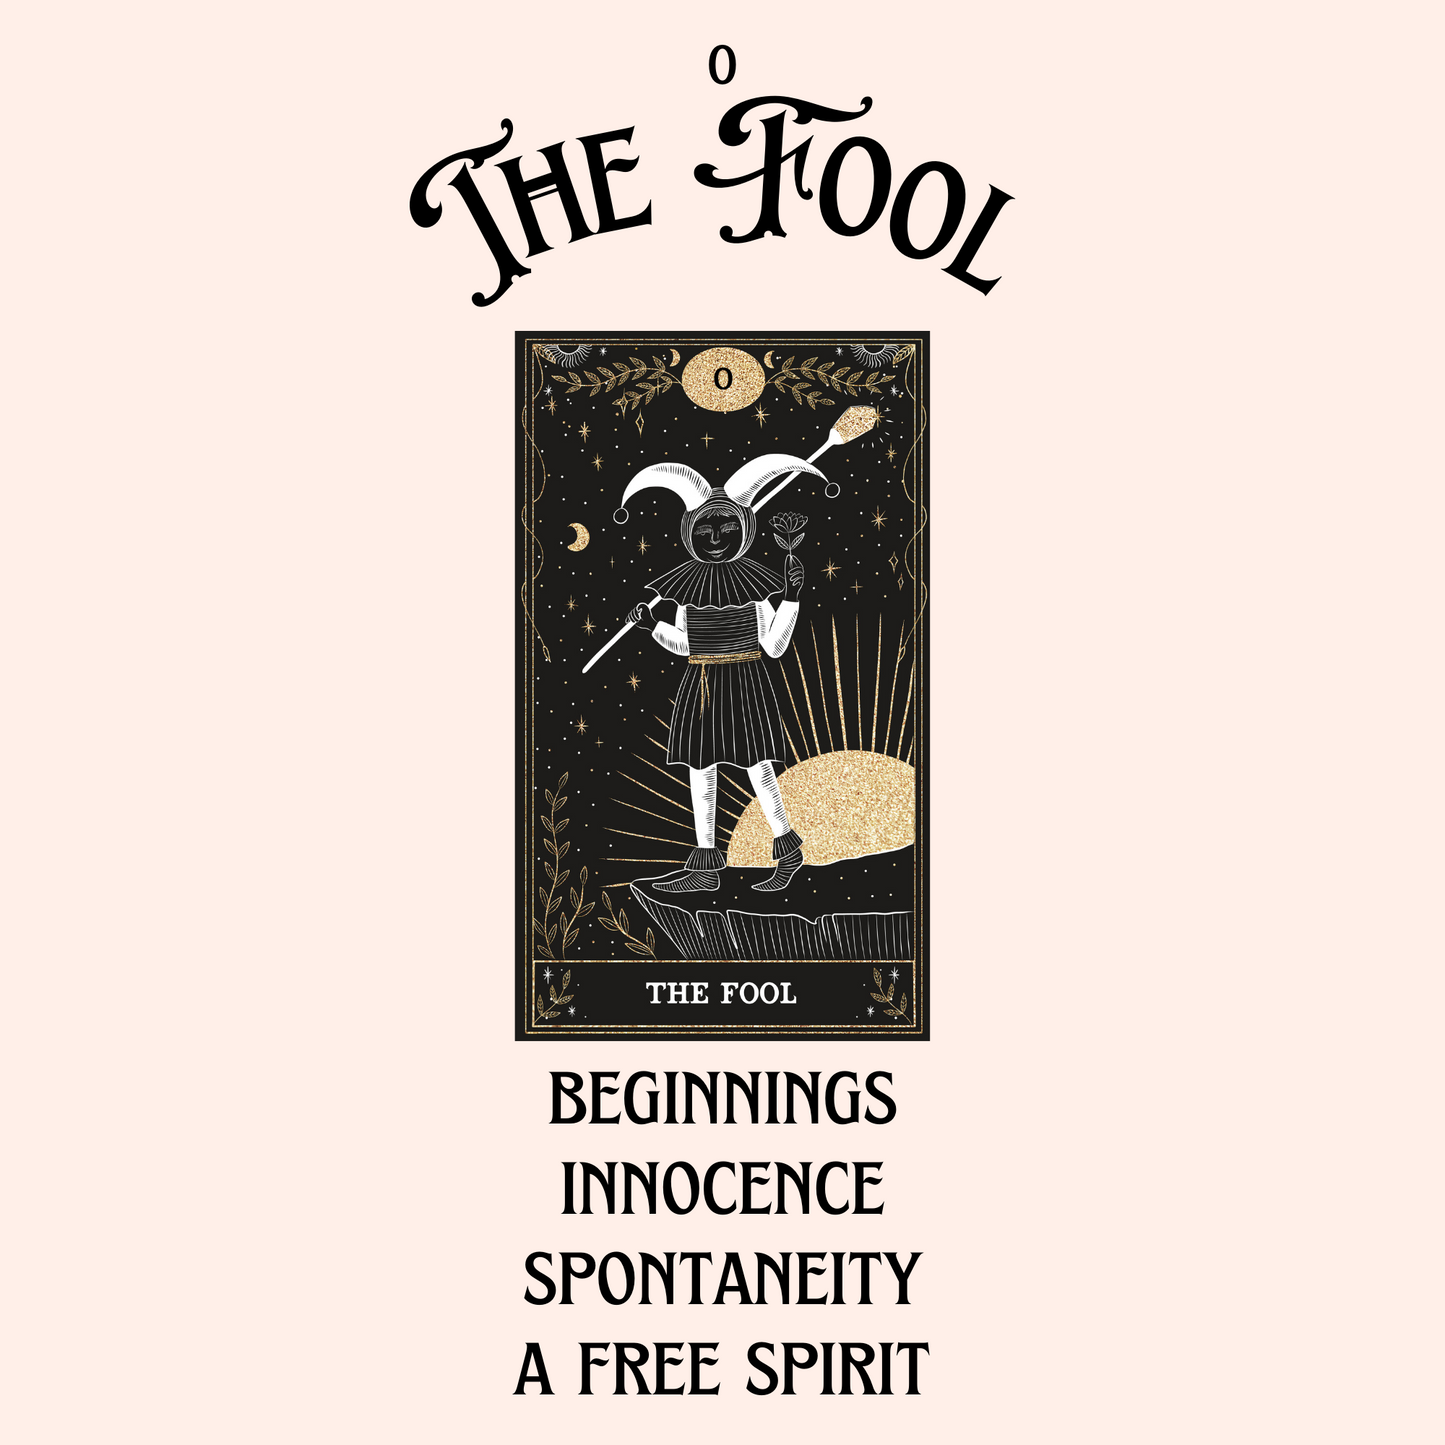 Tarot Card Keychain | The Fool | Handmade Accessories